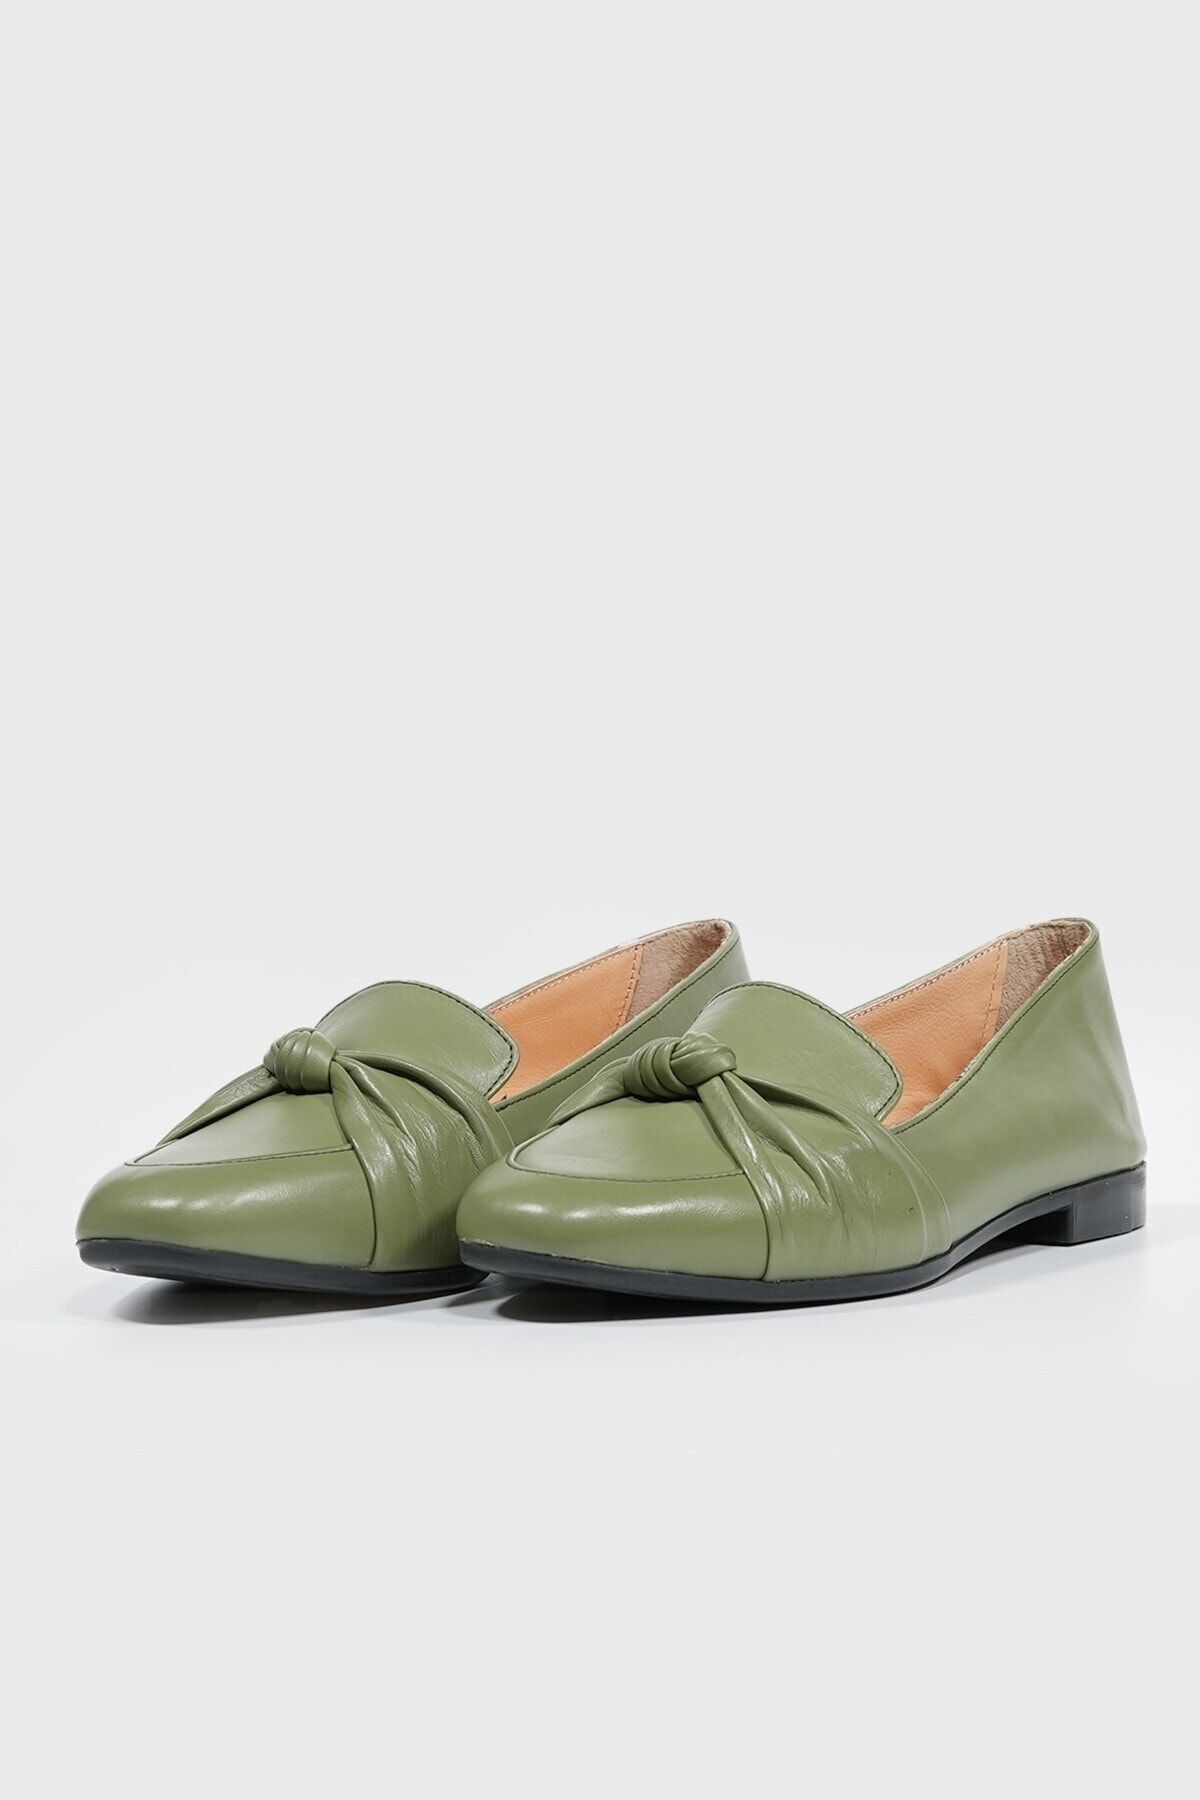 TUNAELLİ کفش کتانی چرم طبیعی زنانه سبز خاکی شماره 36-41